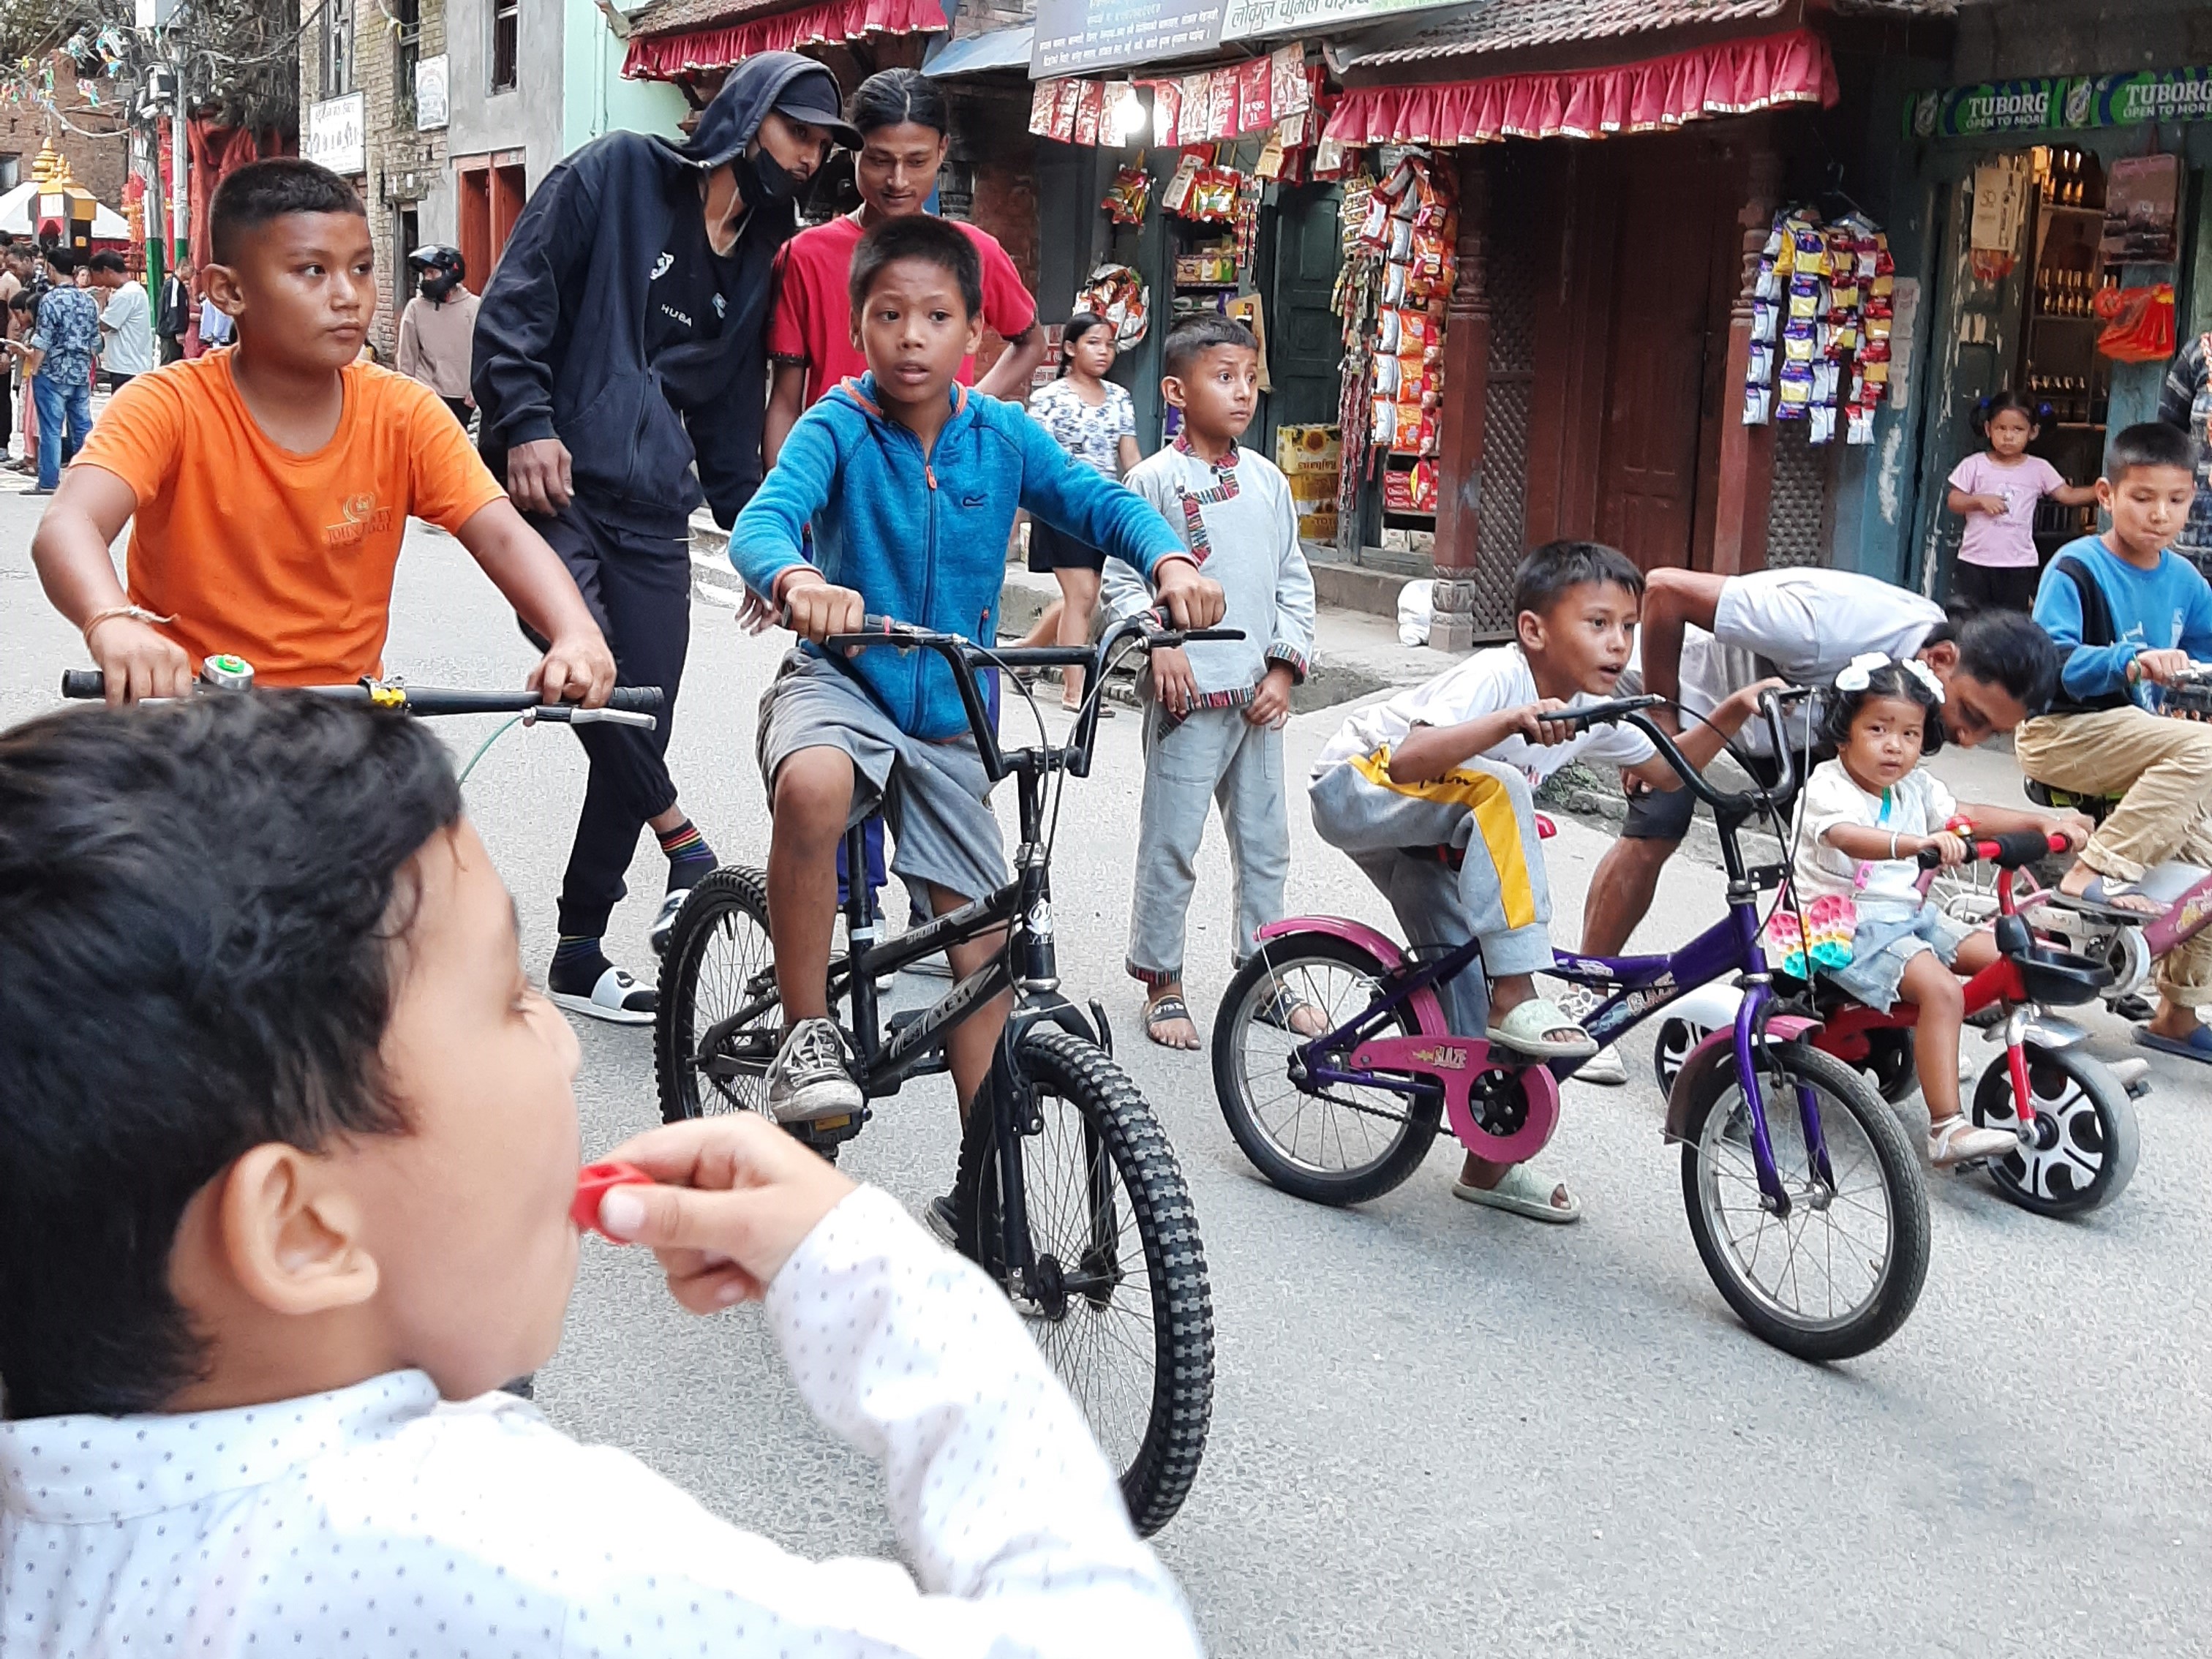 Children racing their cycles on the road on car-free Saturdays in Handigaon. Photo Courtesy: Niharika Mathema